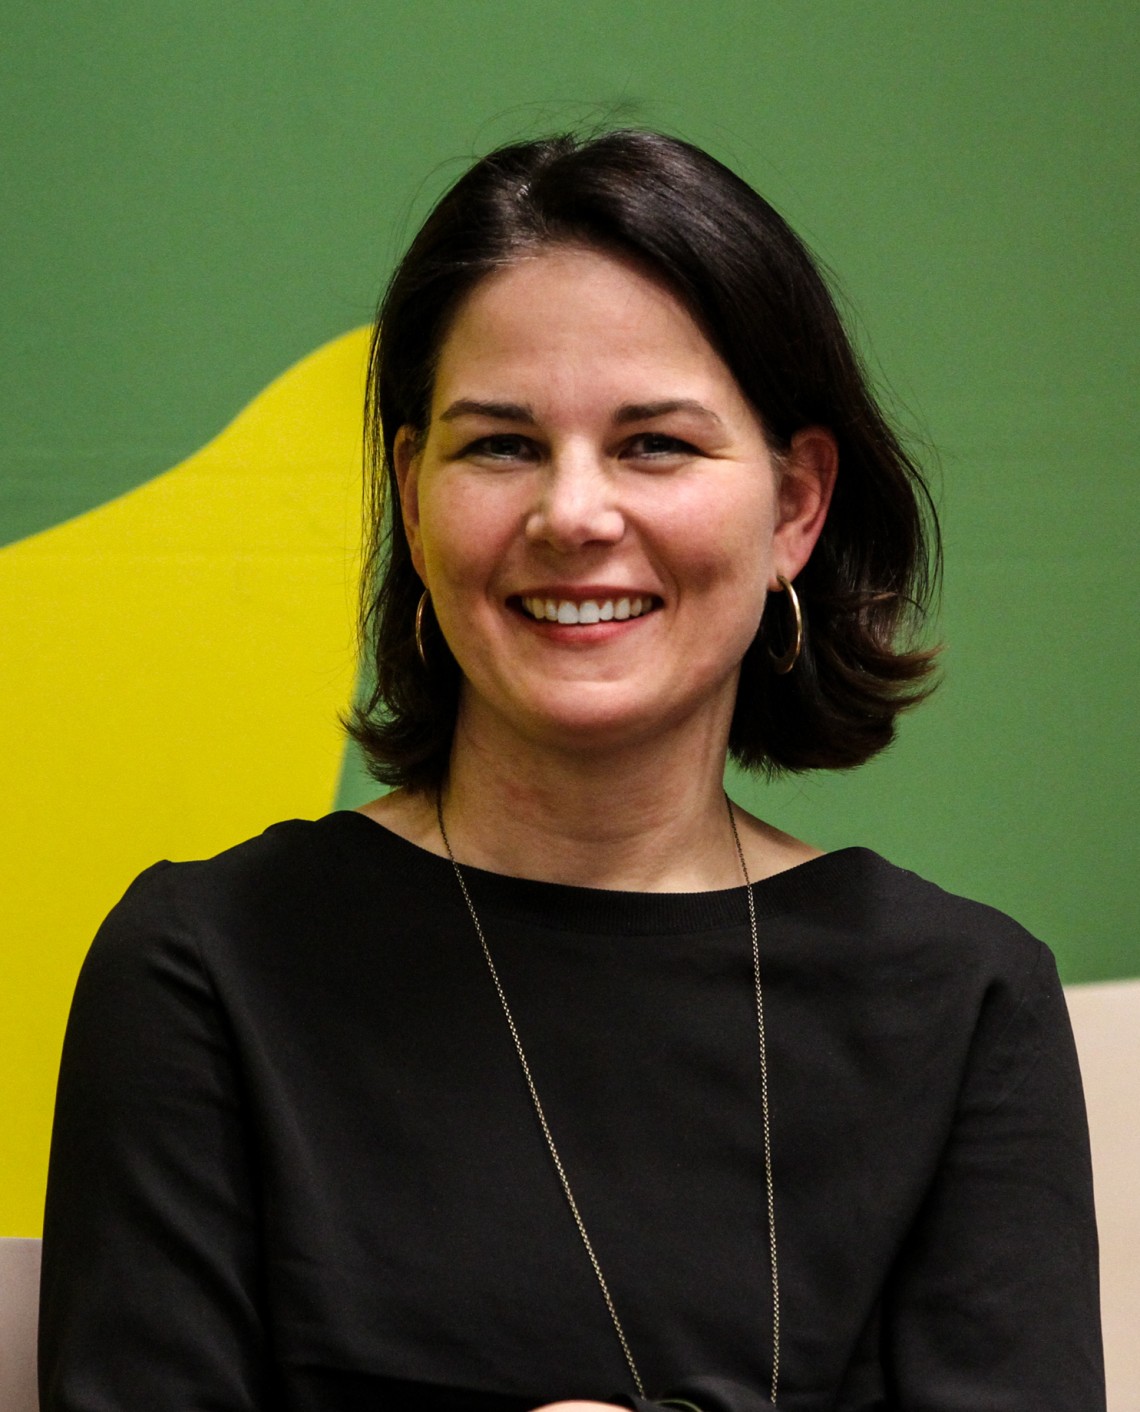 Annalena Baerbock, candidata Verzilor la postul de cancelar. Sursa foto: Scheint sinnig - Own work, CC BY-SA 4.0, https://commons.wikimedia.org